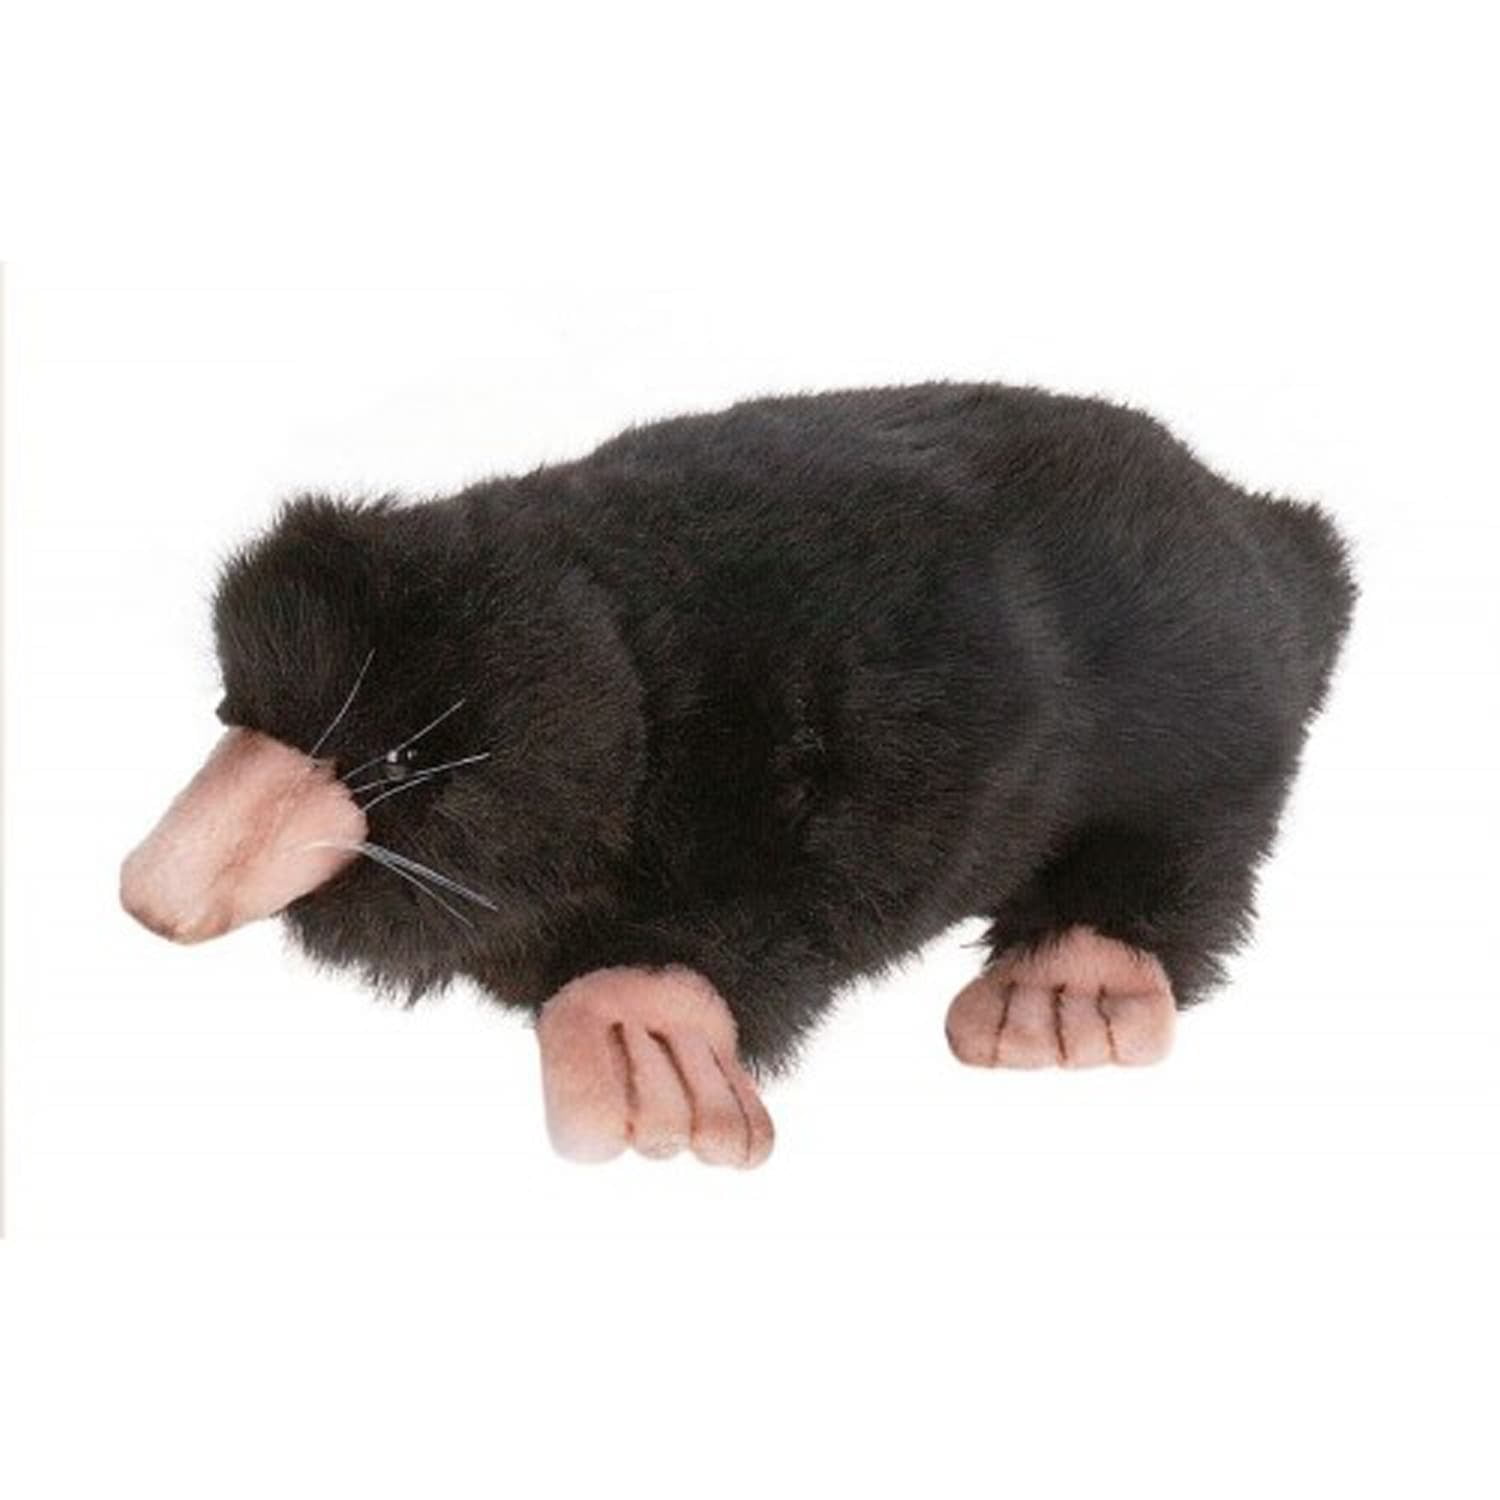 mole stuffed animal walmart